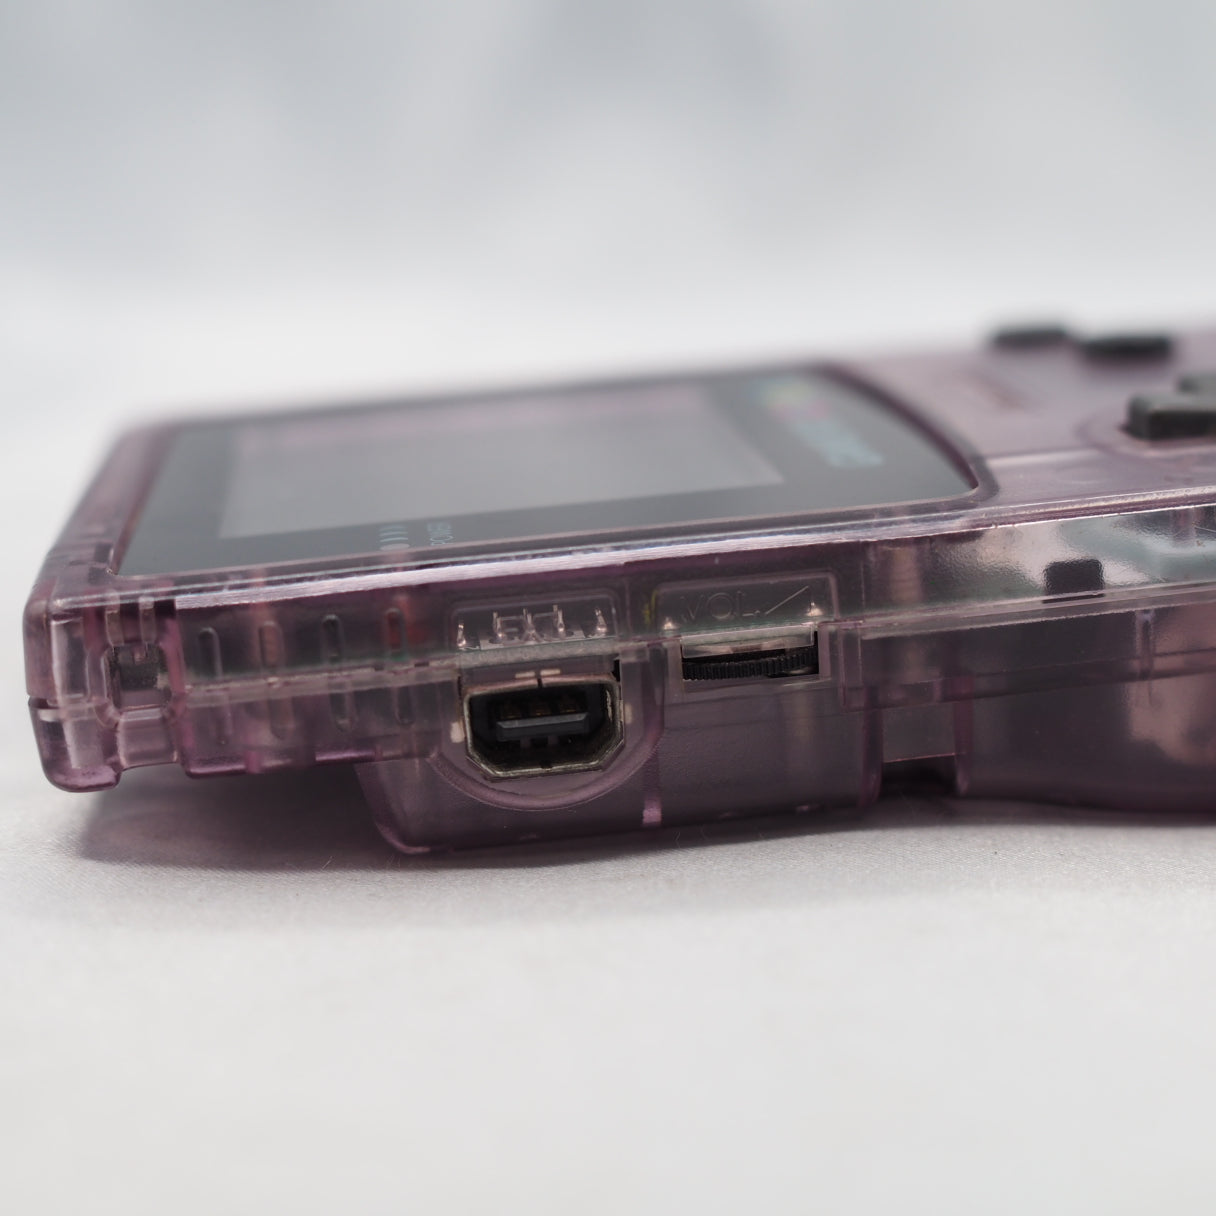 Nintendo GAMEBOY COLOR Console CGB-001 [Clear Purple]